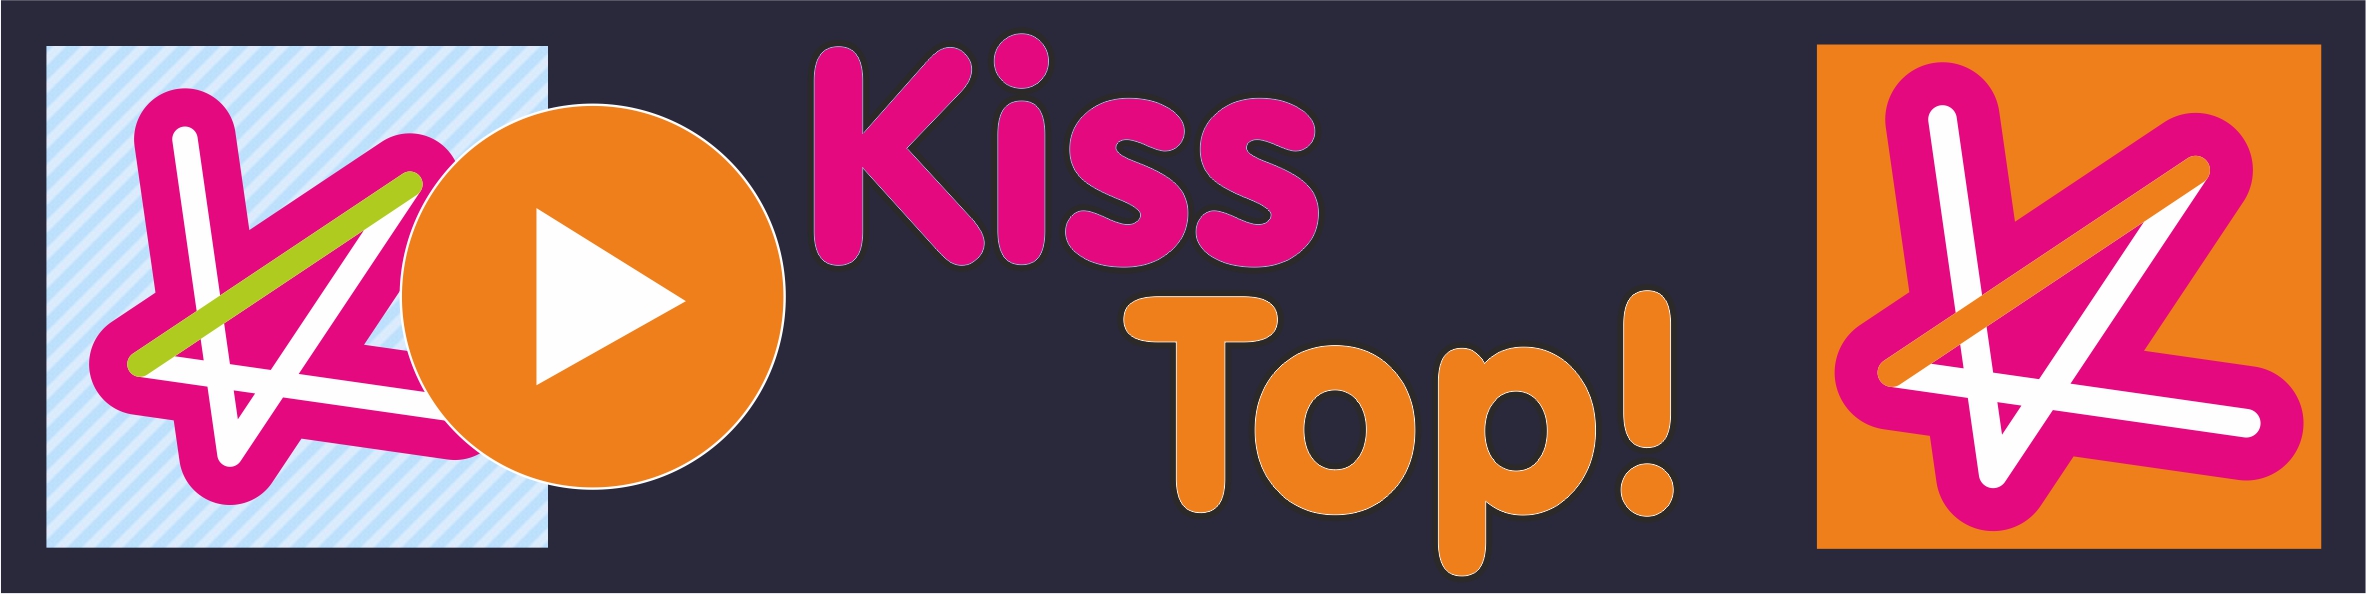 Kiss Top!